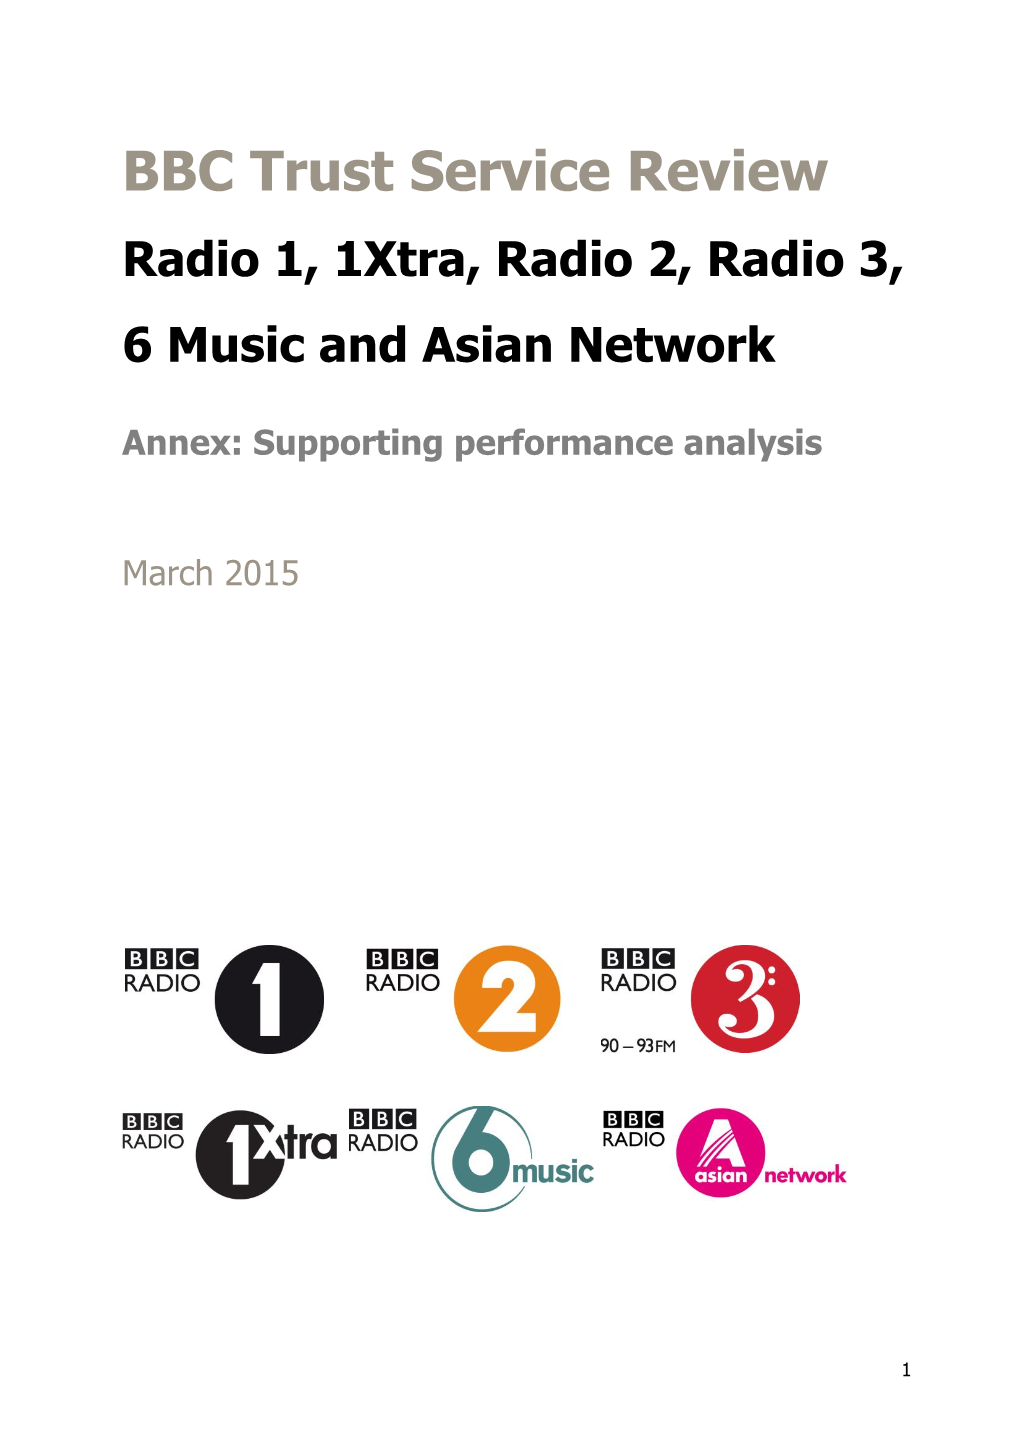 BBC Trust Service Review Radio 1, 1Xtra, Radio 2, Radio 3, 6 Music and Asian Network